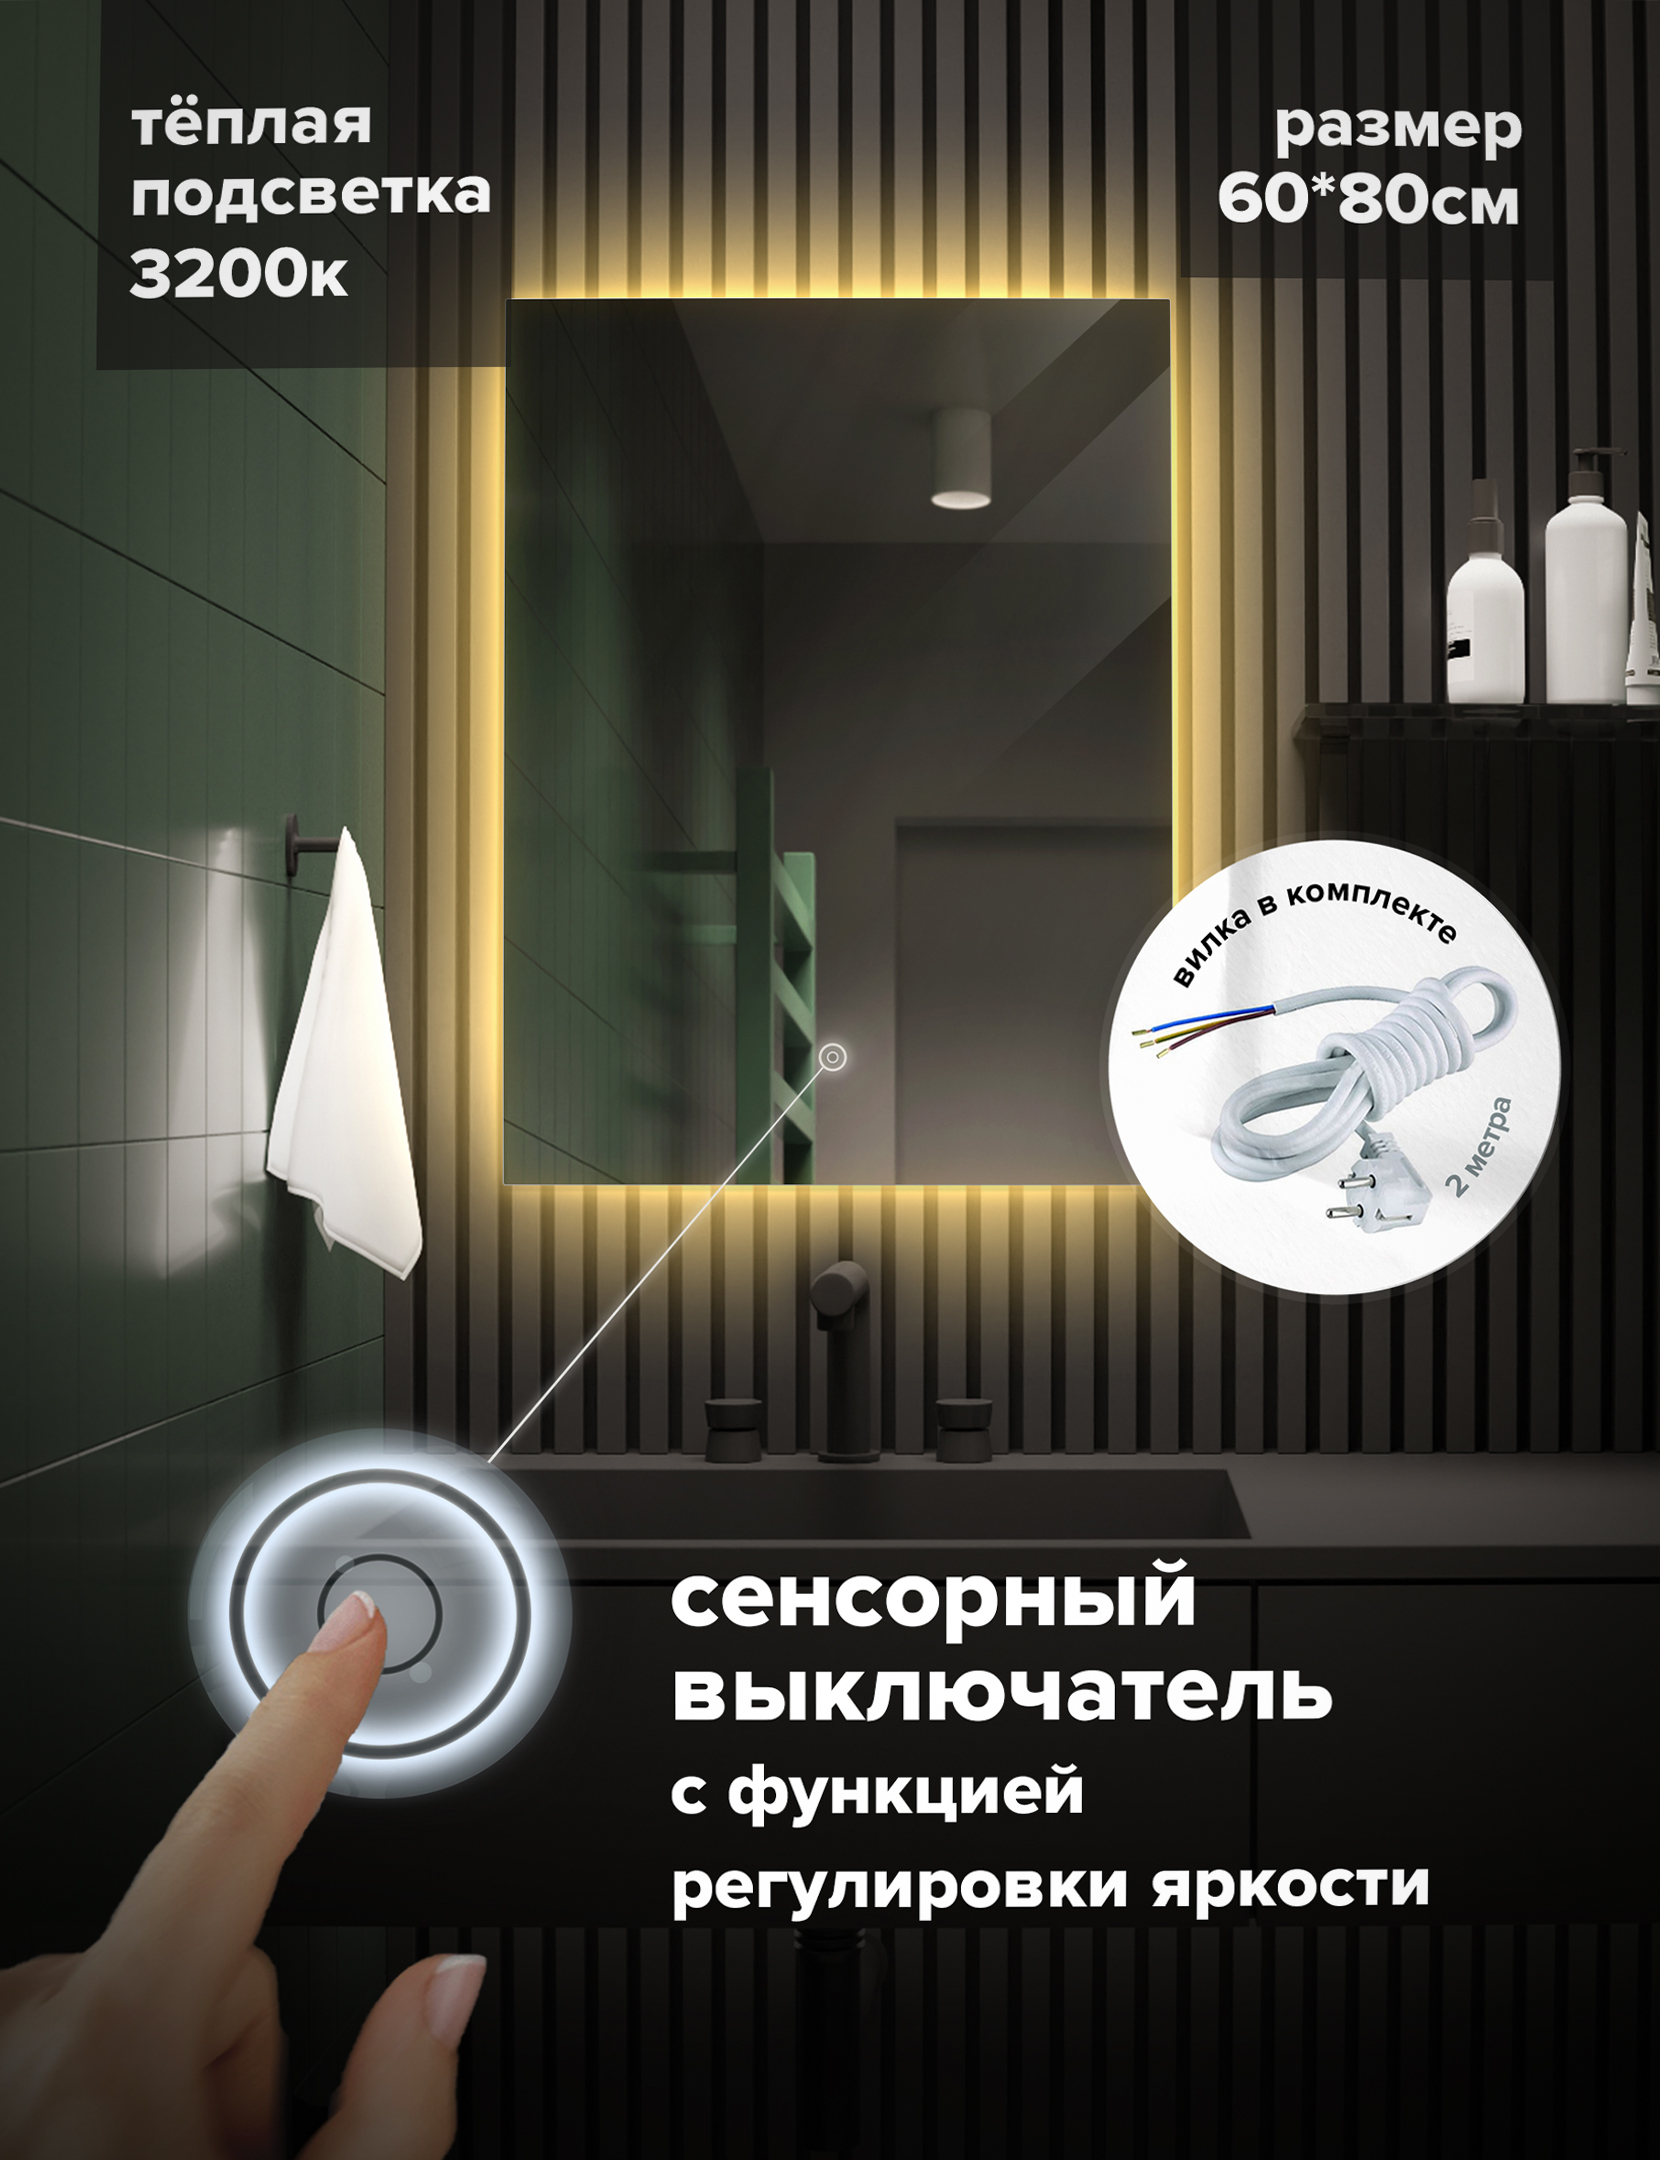 Зеркало для ванной Alfa Mirrors MEK-68Vt прямоугольное, теплая подсветка, 60х80см led pls 200 20m 240v ww bl f w o белая теплая пров белый теплый flash без силового шнура